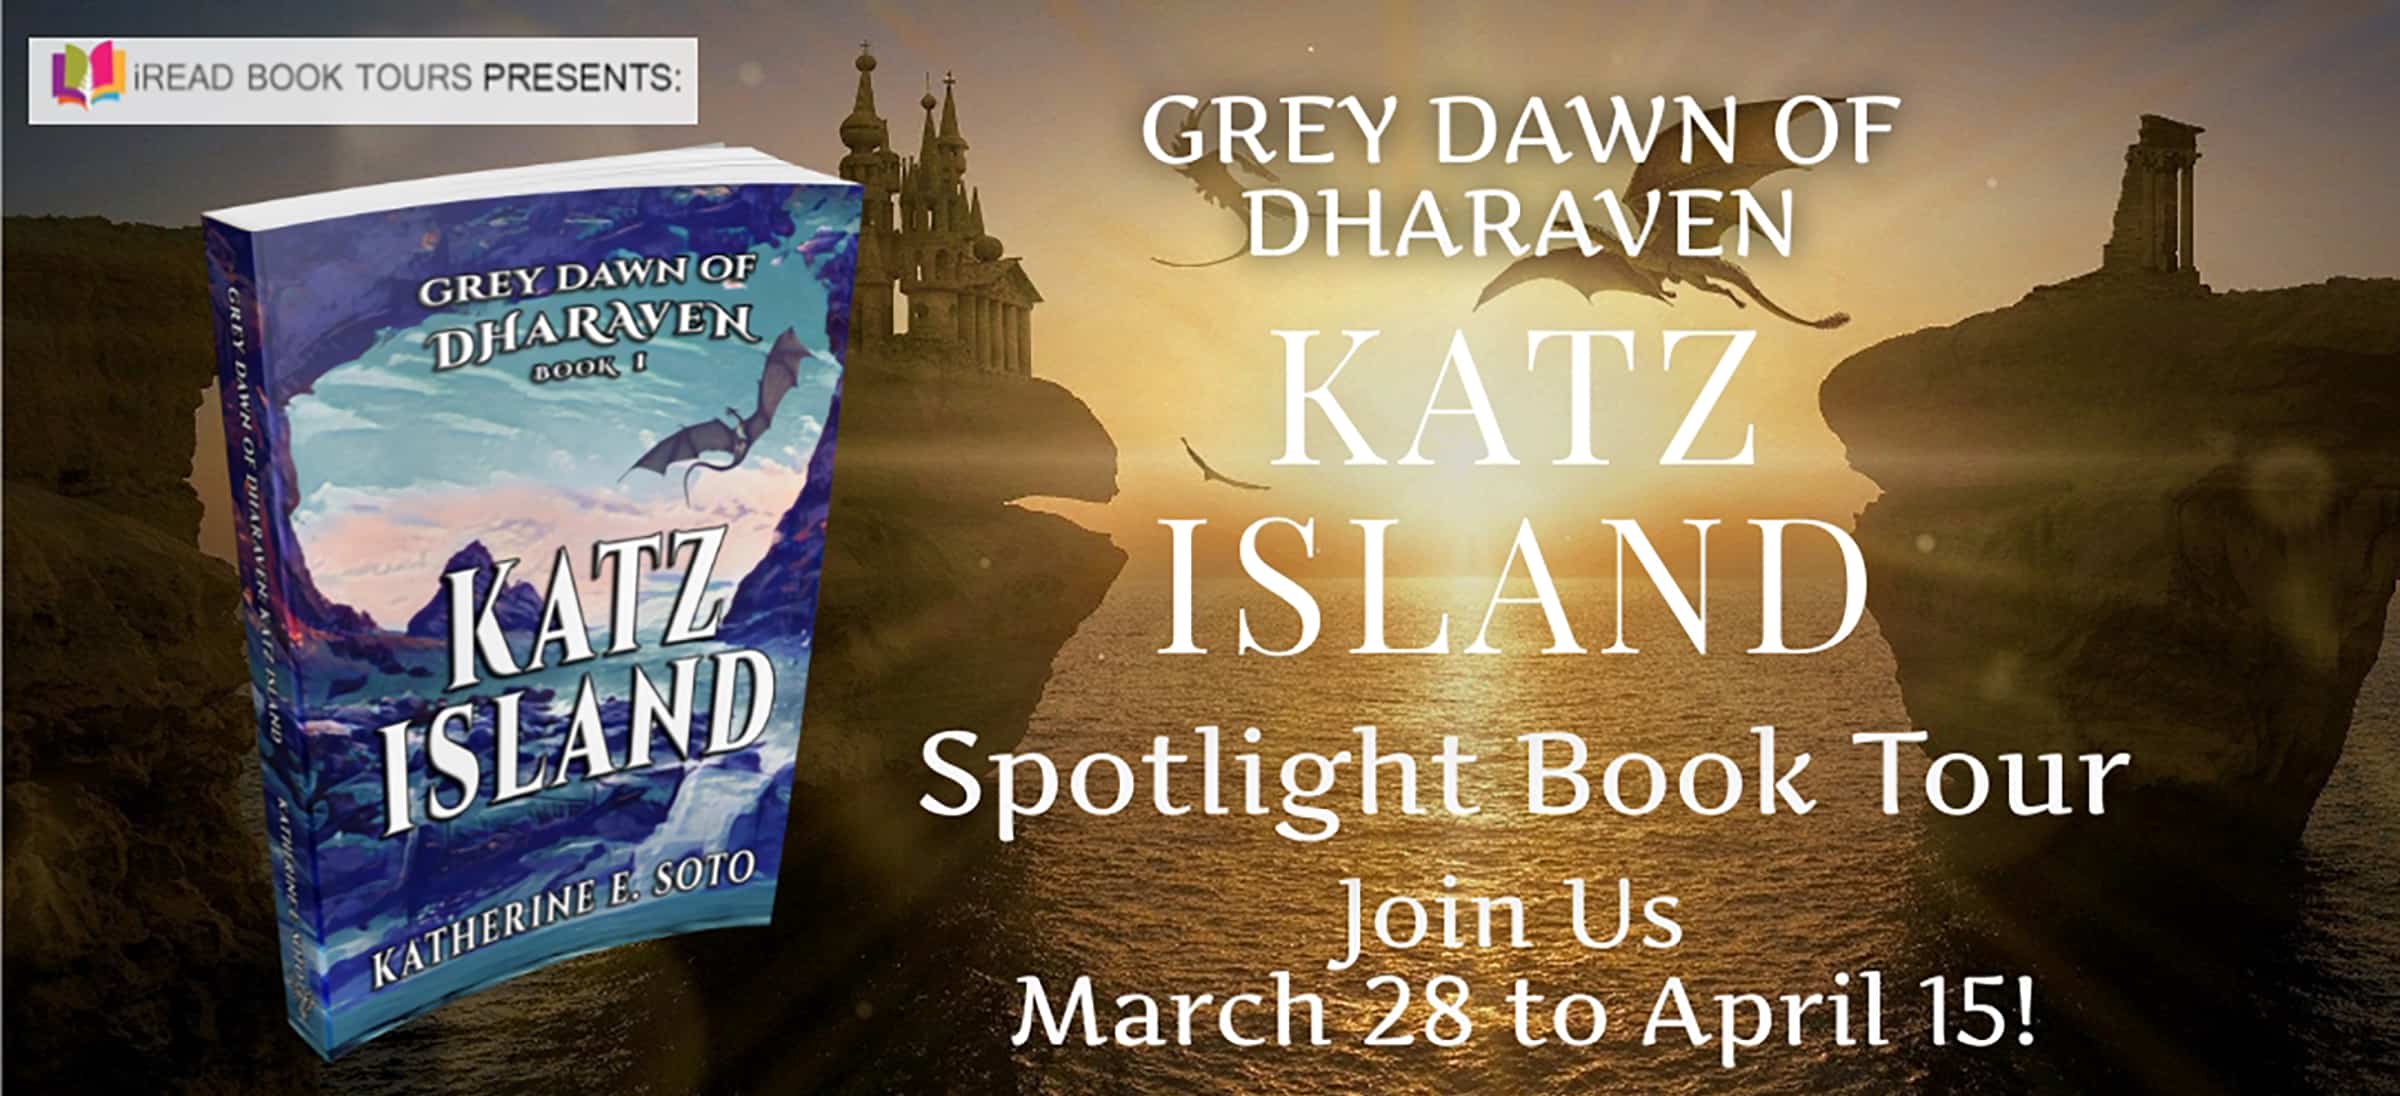 Katz Island (Grey Dawn of Dharaven Book 1) by Katherine E. Soto | Giveaway - Spotlight 